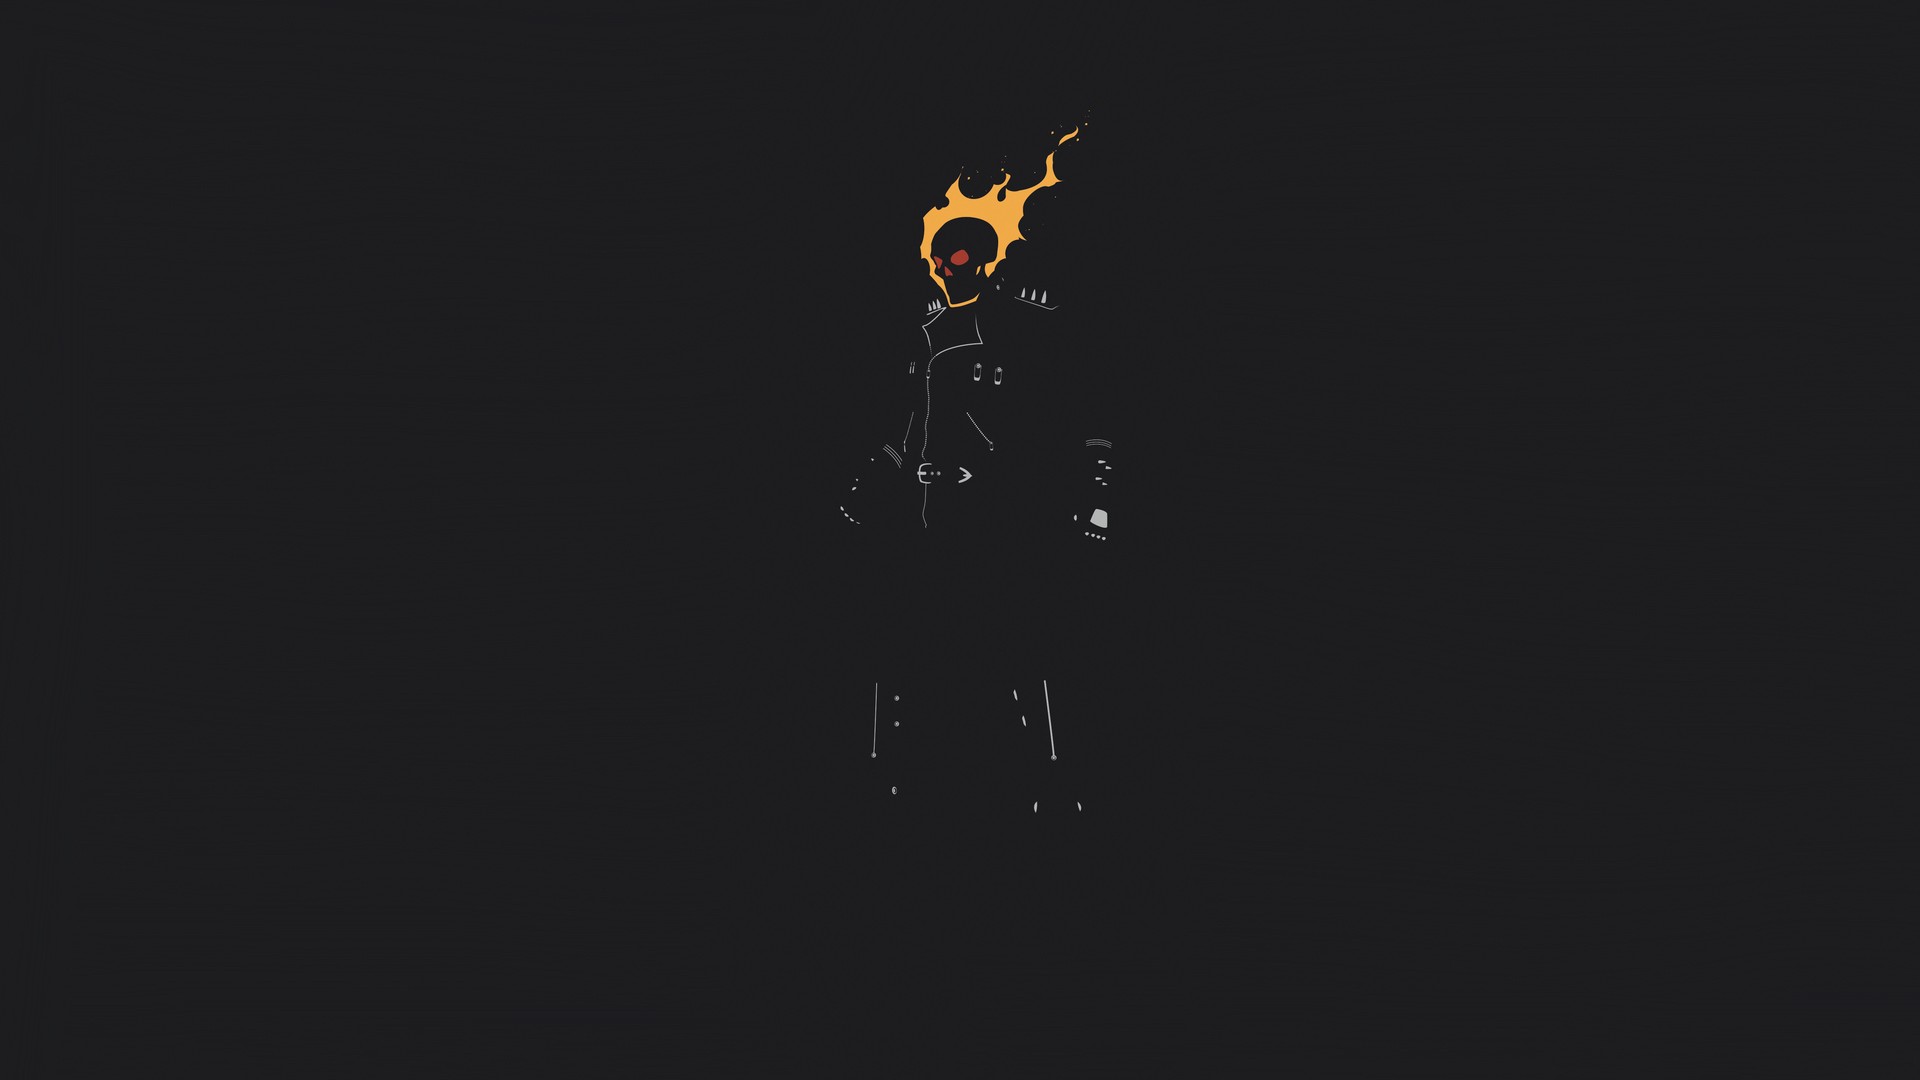 X ghost rider minimalism artist dark jpg kb